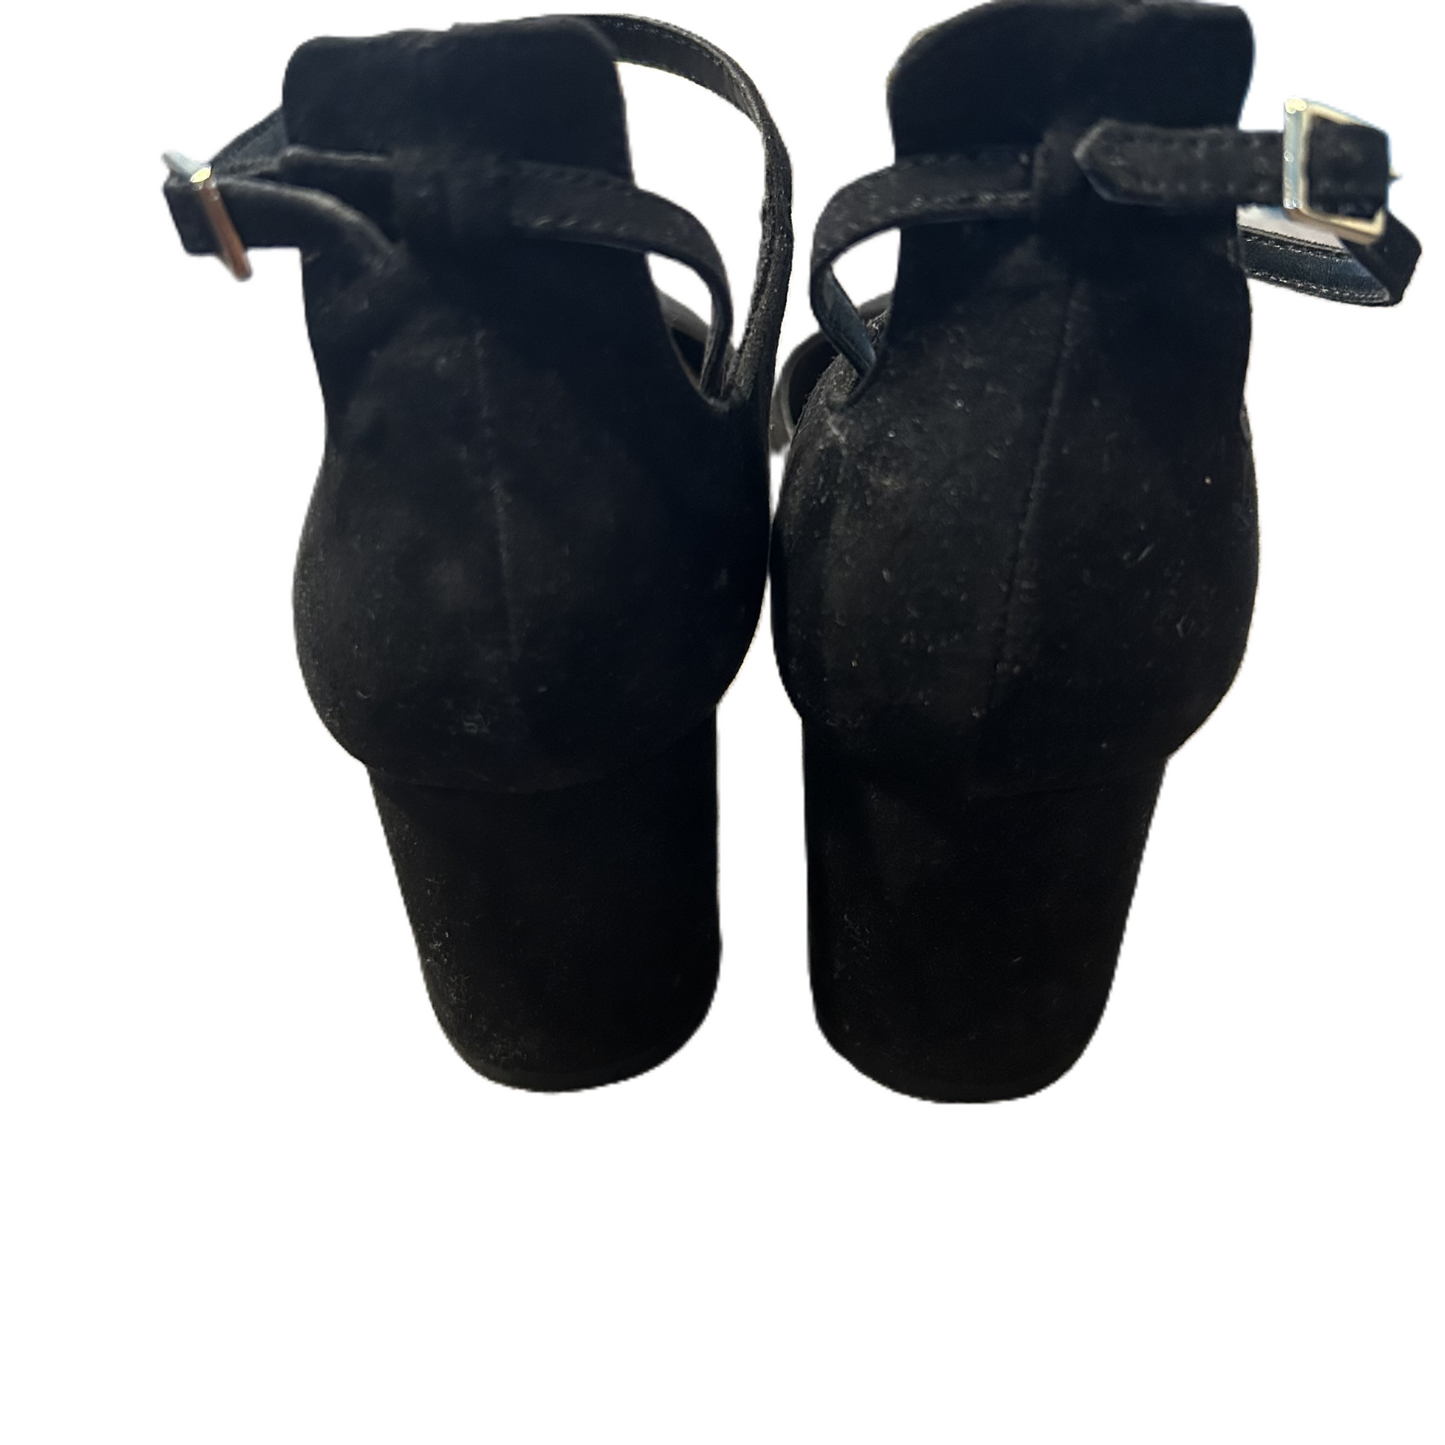 Black Shoes Heels Block By Apt 9, Size: 7